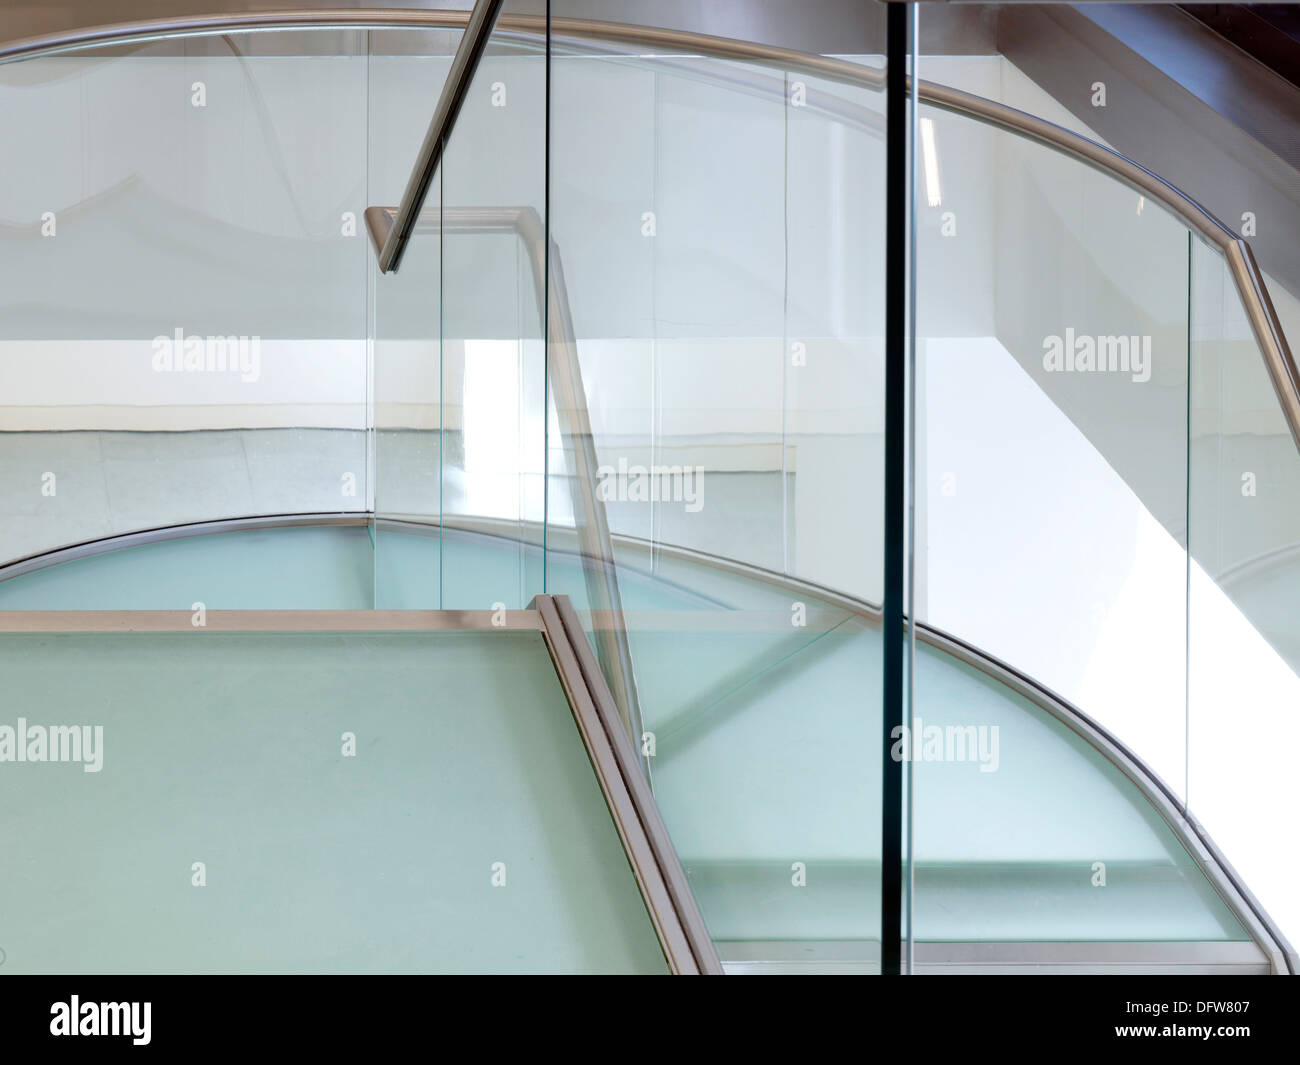 One Valentine Place, London, United Kingdom. Architect: Stiff + Trevillion Architects, 2013. Glazed stairway detail. Stock Photo